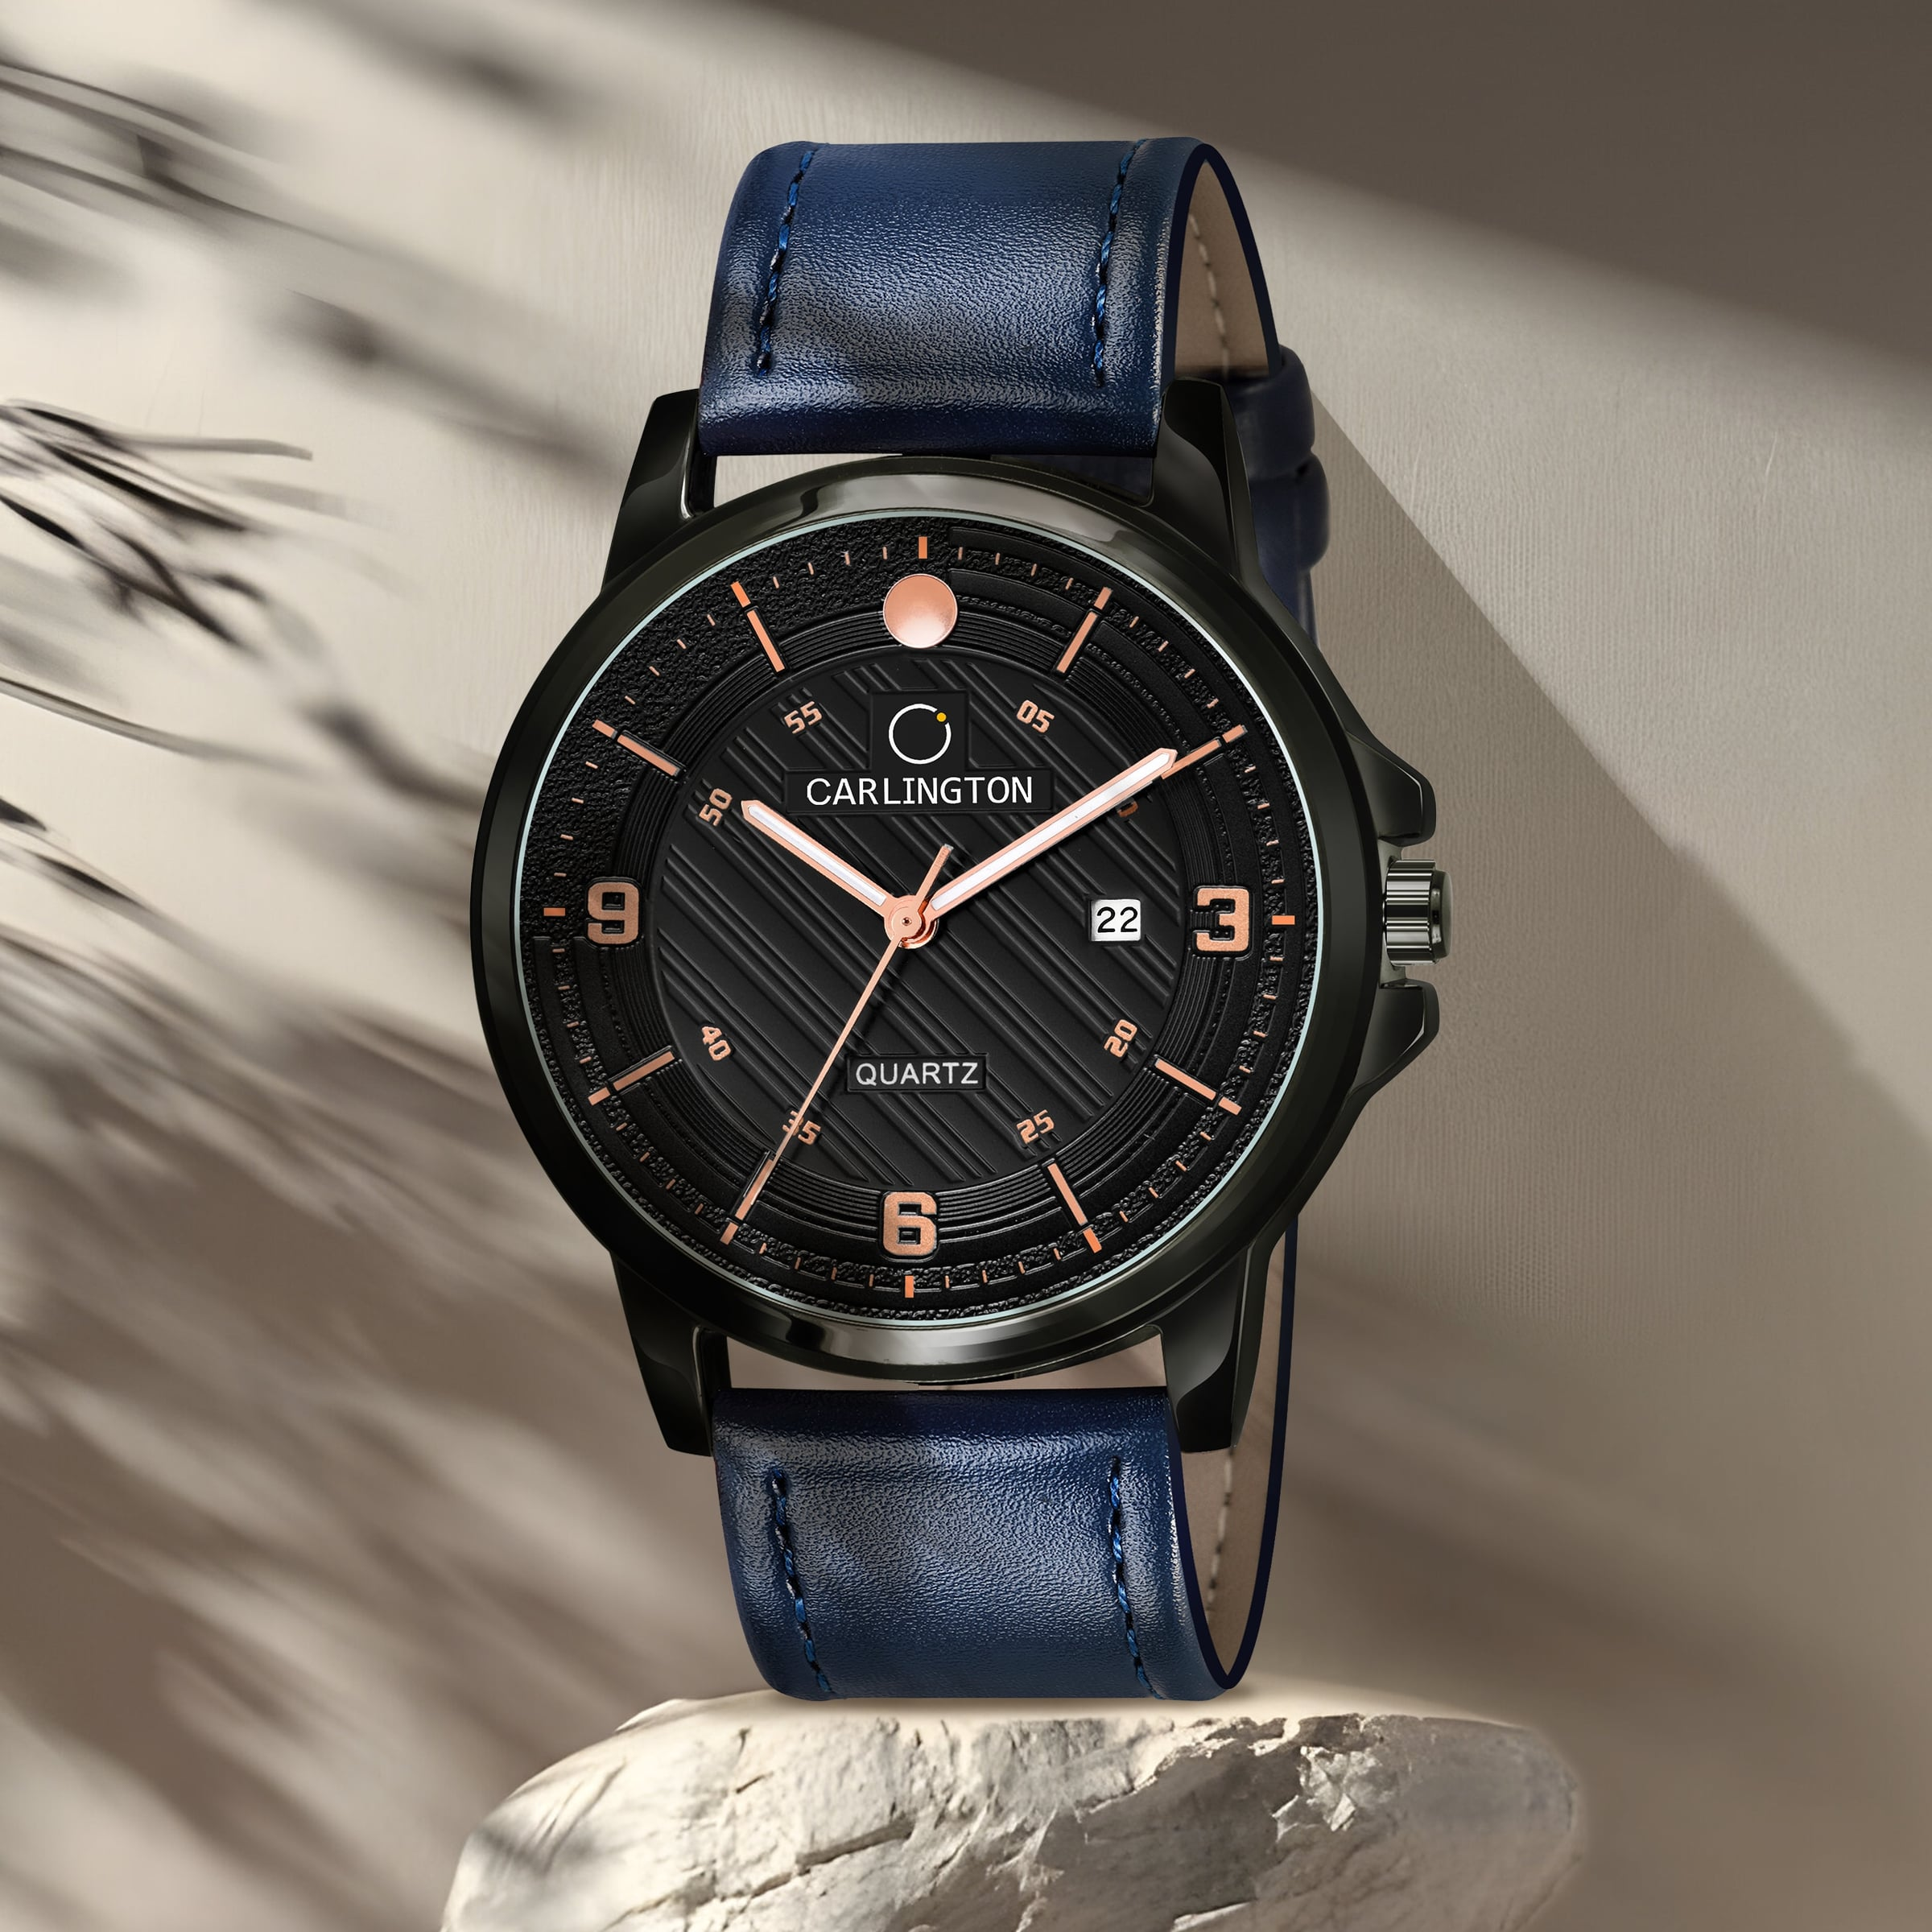 Carlington elite analog men's watch ct1050 blue